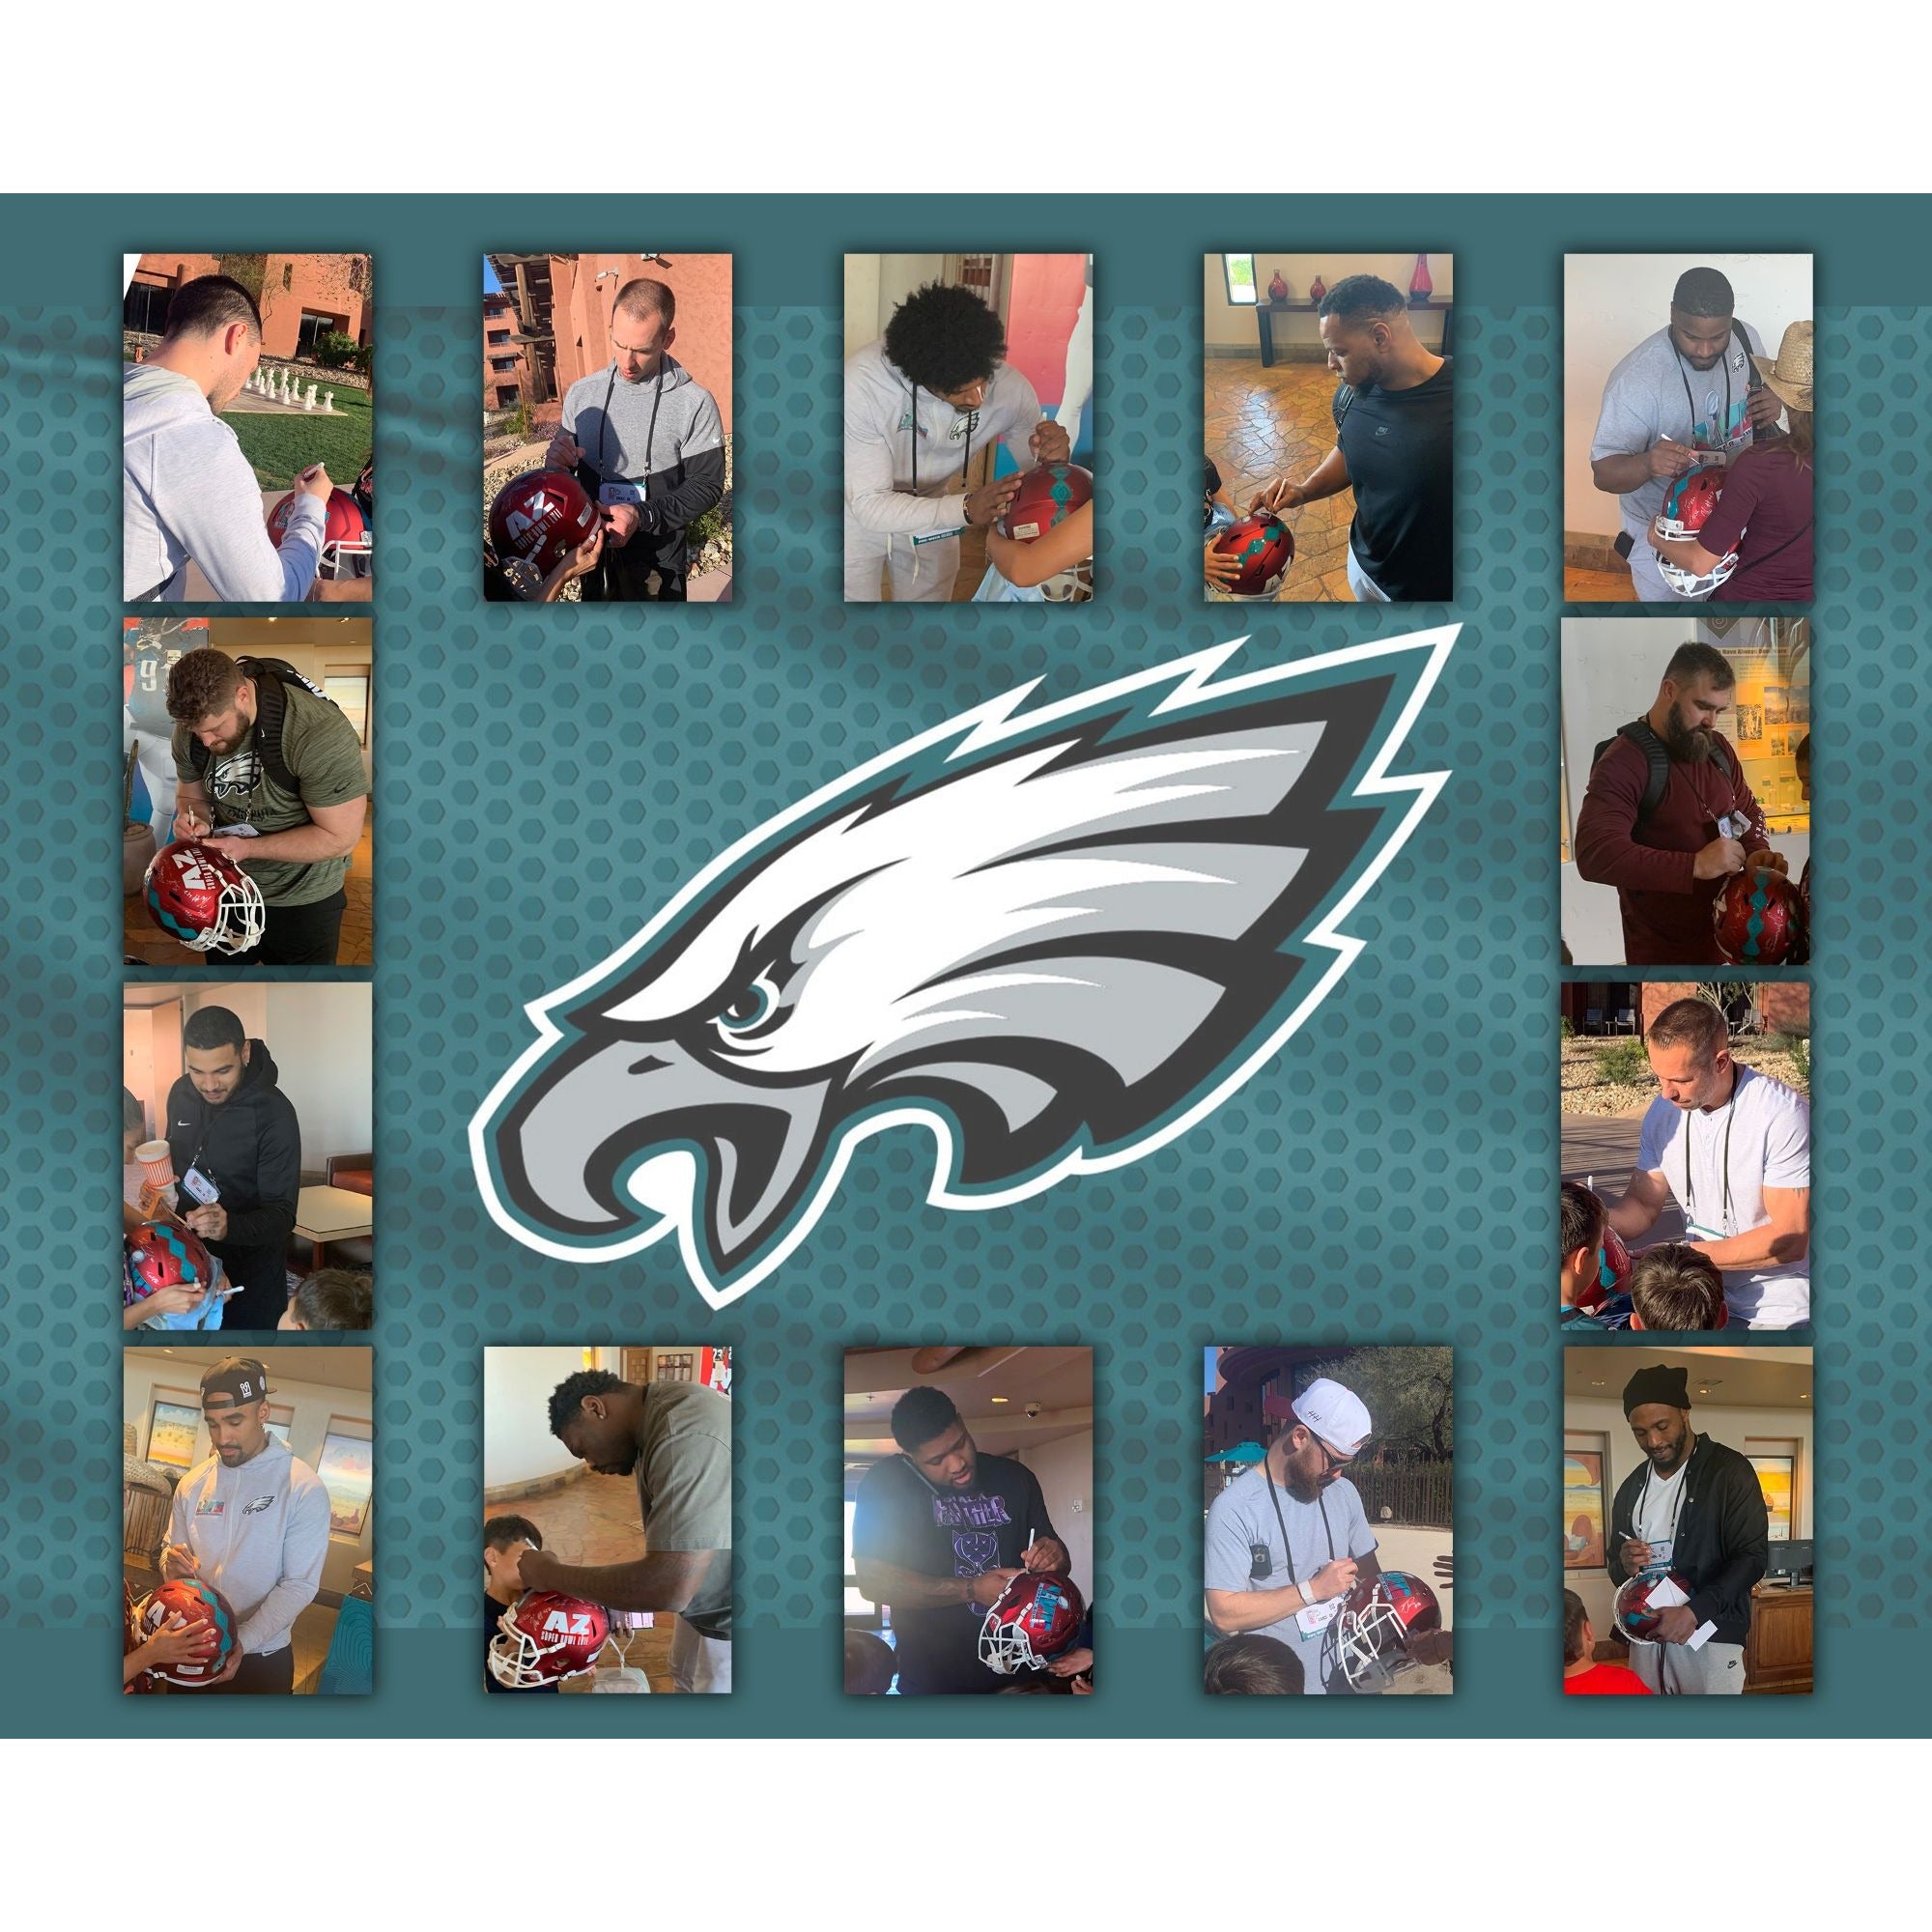 DeVonta Smith Philadelphia Eagles 5x7 photo signed with proof with free acrylic frame